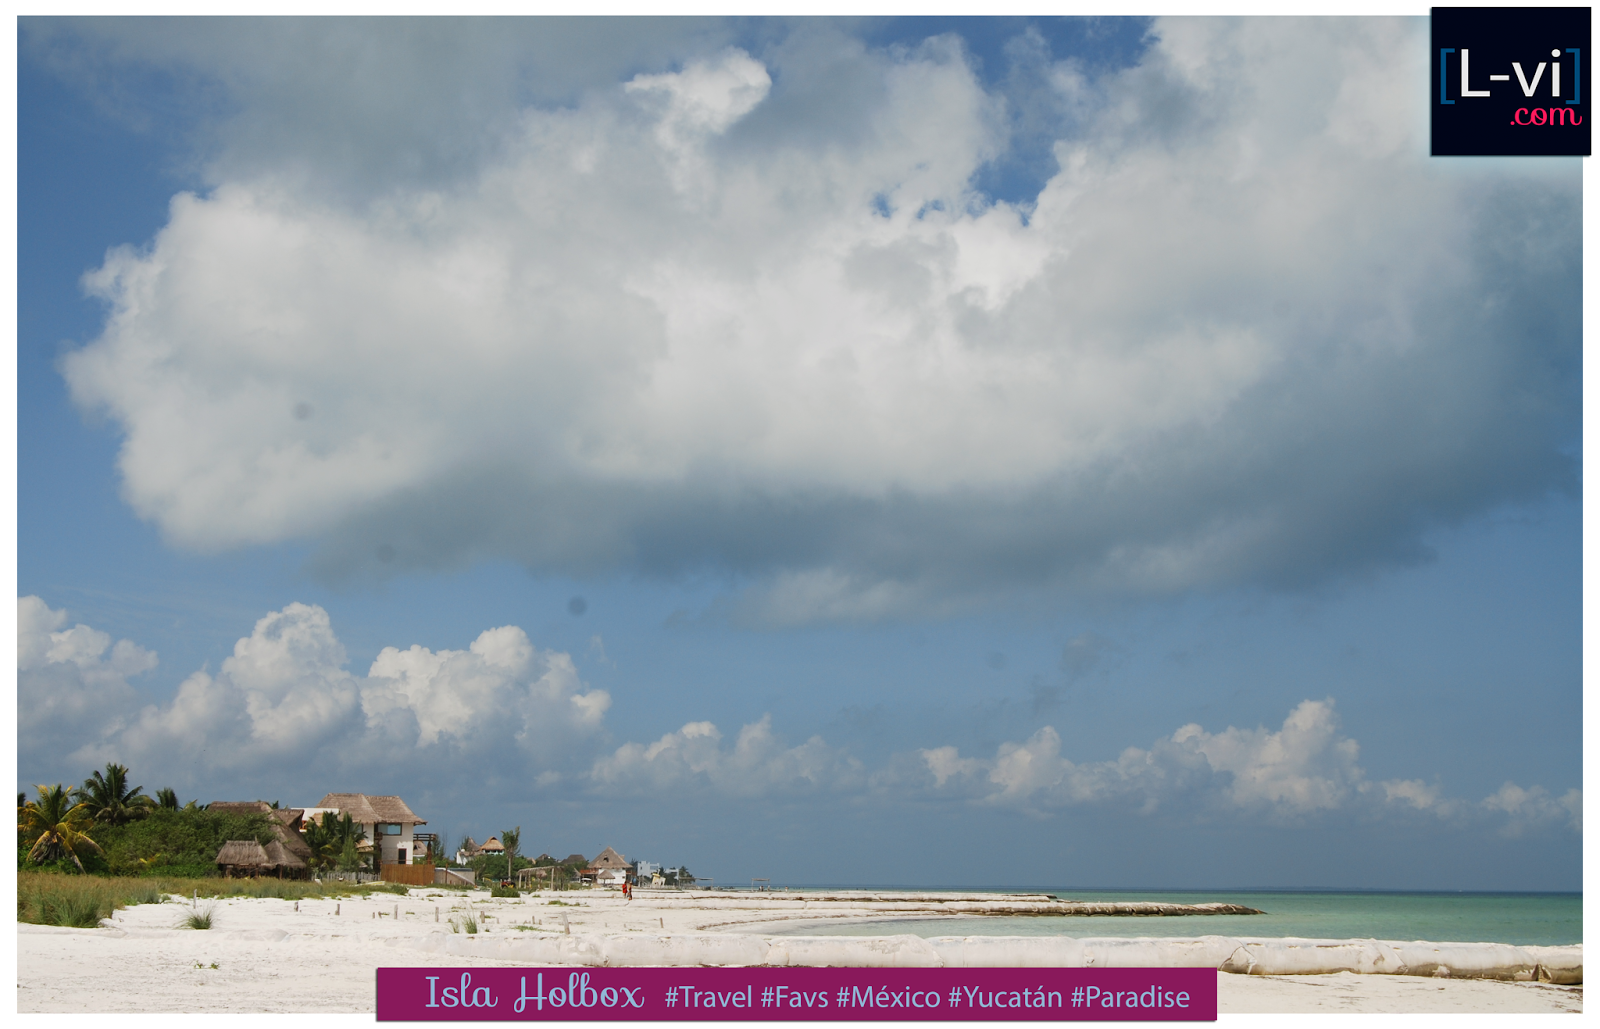 Isla Holbox: The perfect spot for a destination wedding by Lucebuona©.  L-vi.com